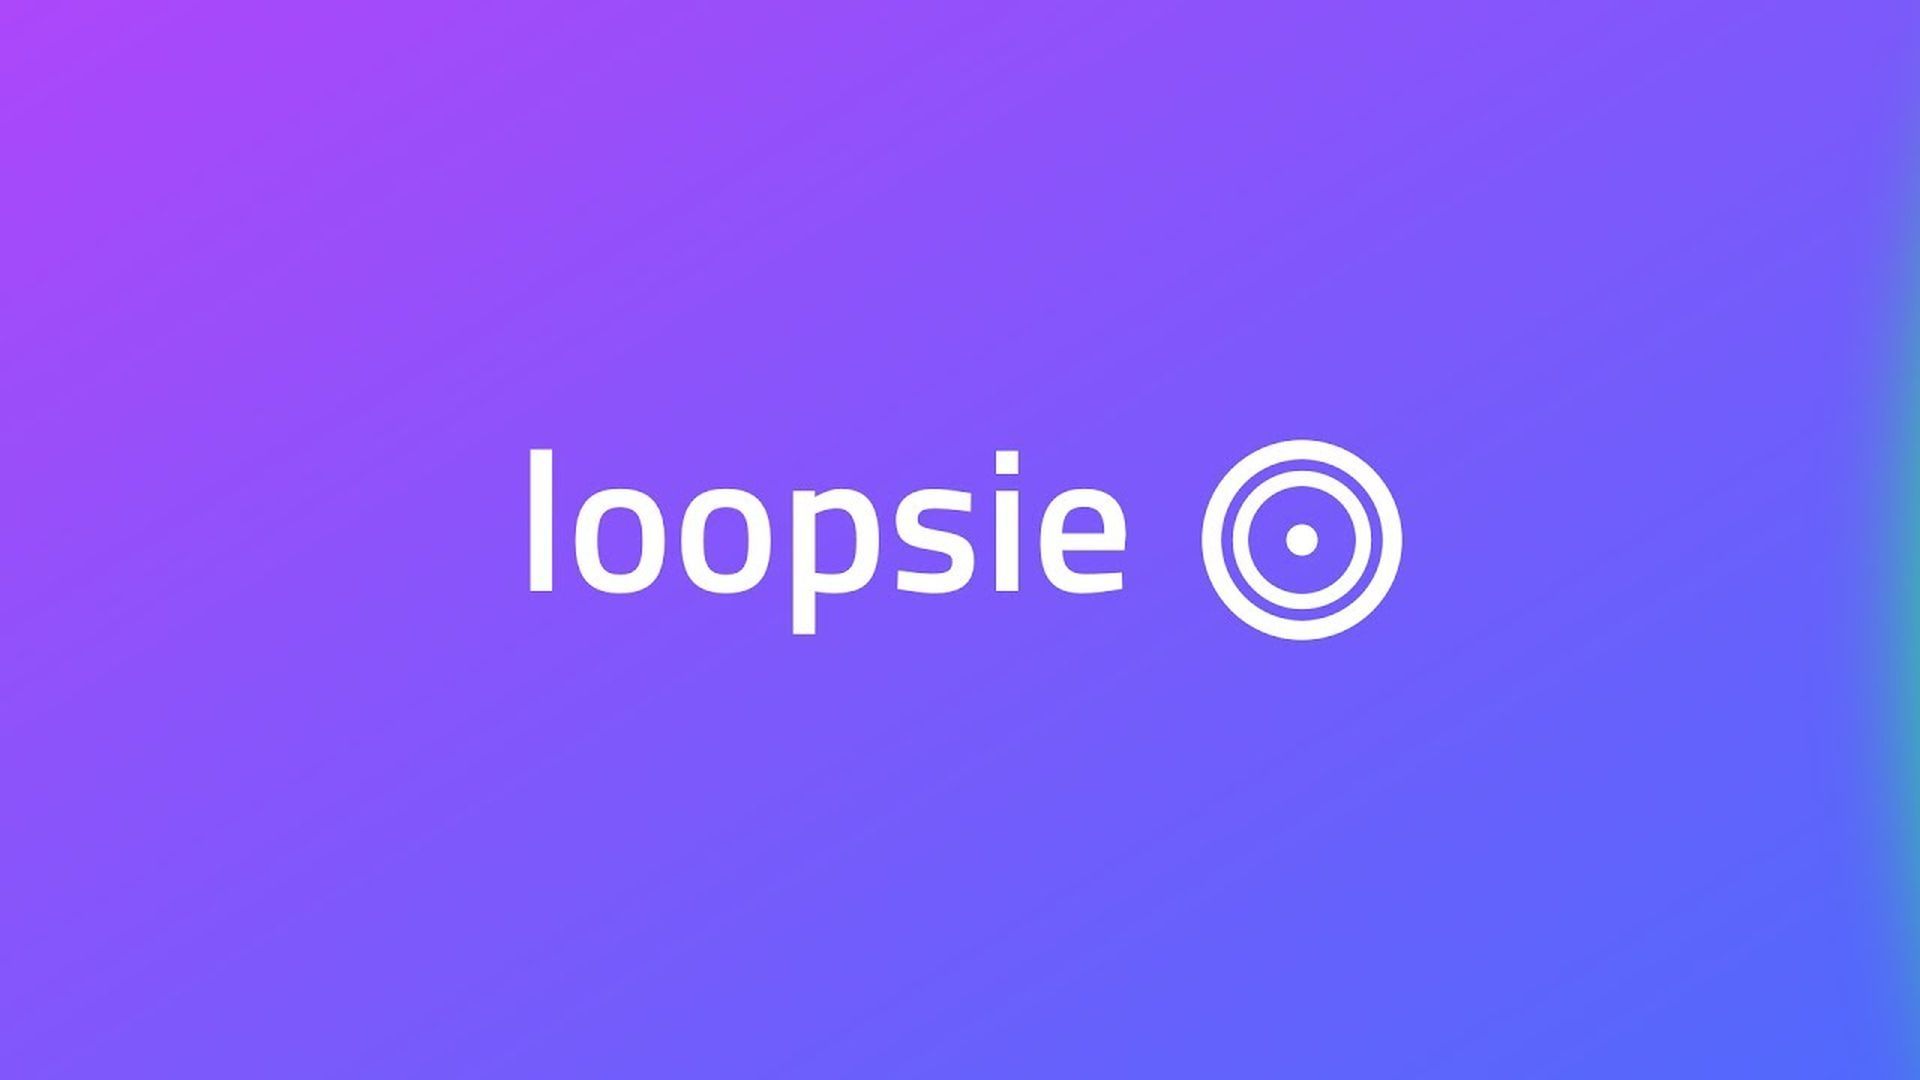 How to use Loopsie